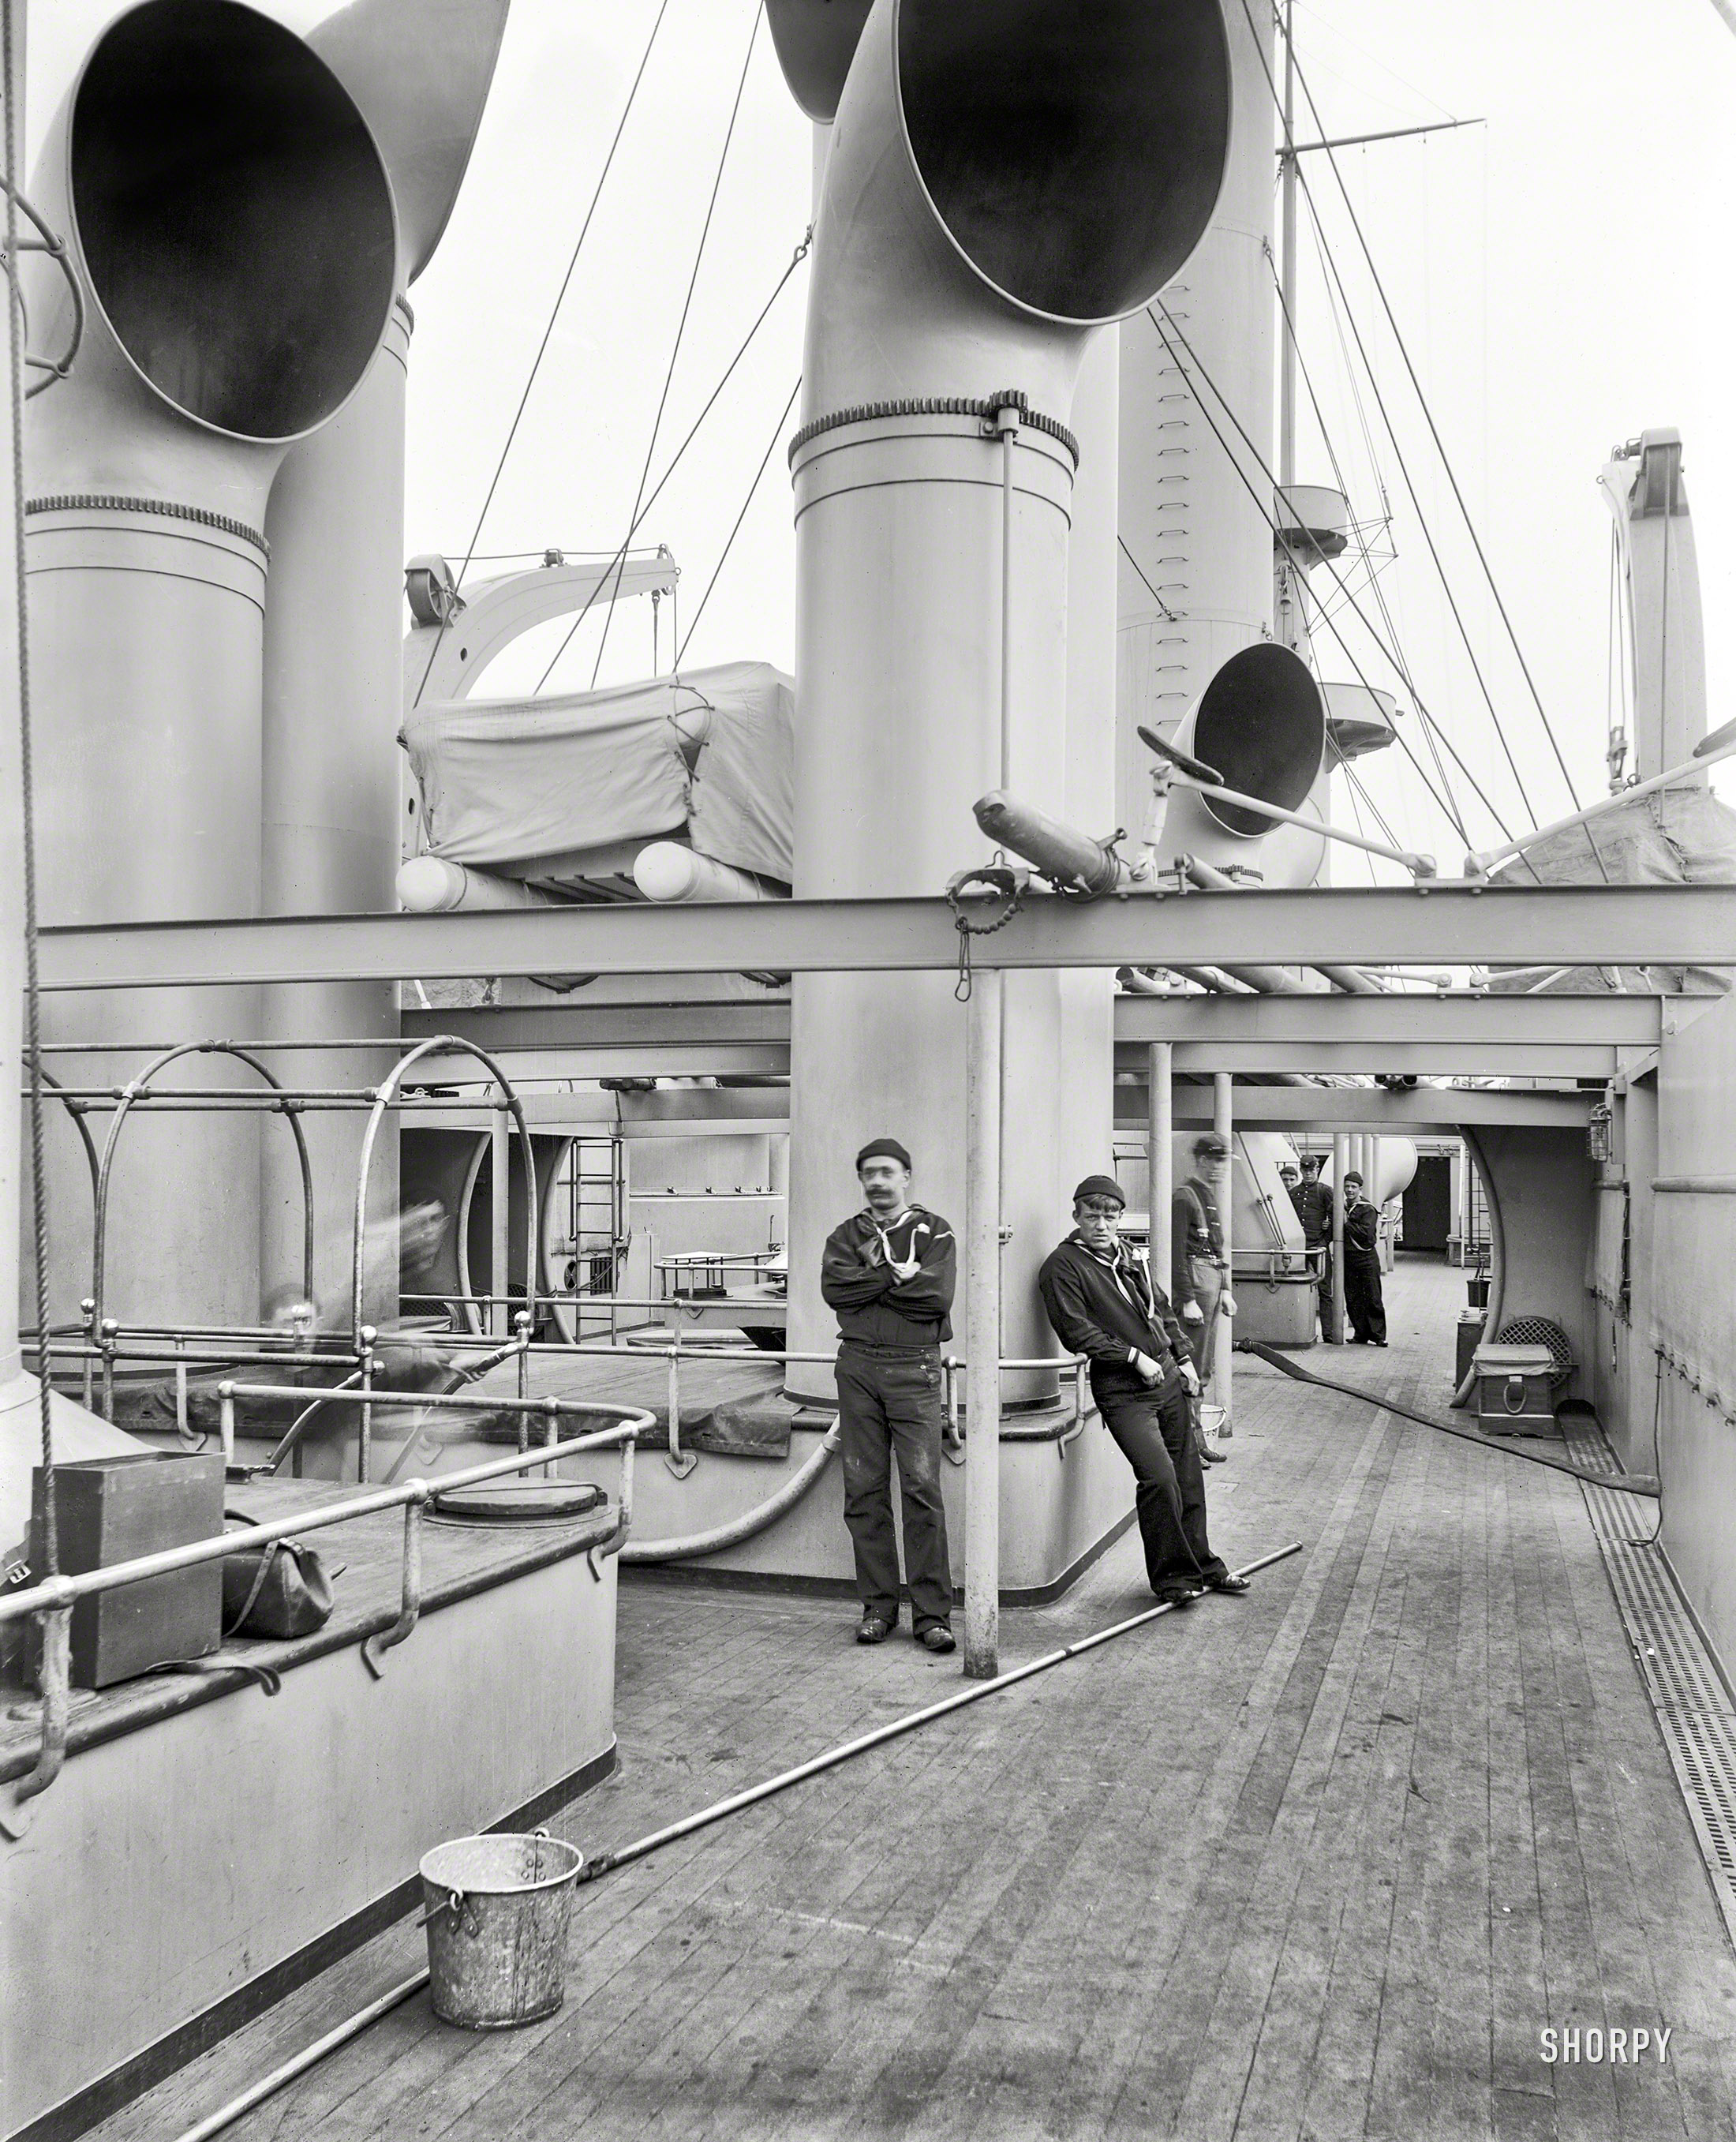 Circa 1898. "League Island Navy Yard, Philadelphia. U.S.S. Brooklyn spar deck." 8x10 inch glass negative, Detroit Publishing Company. View full size.